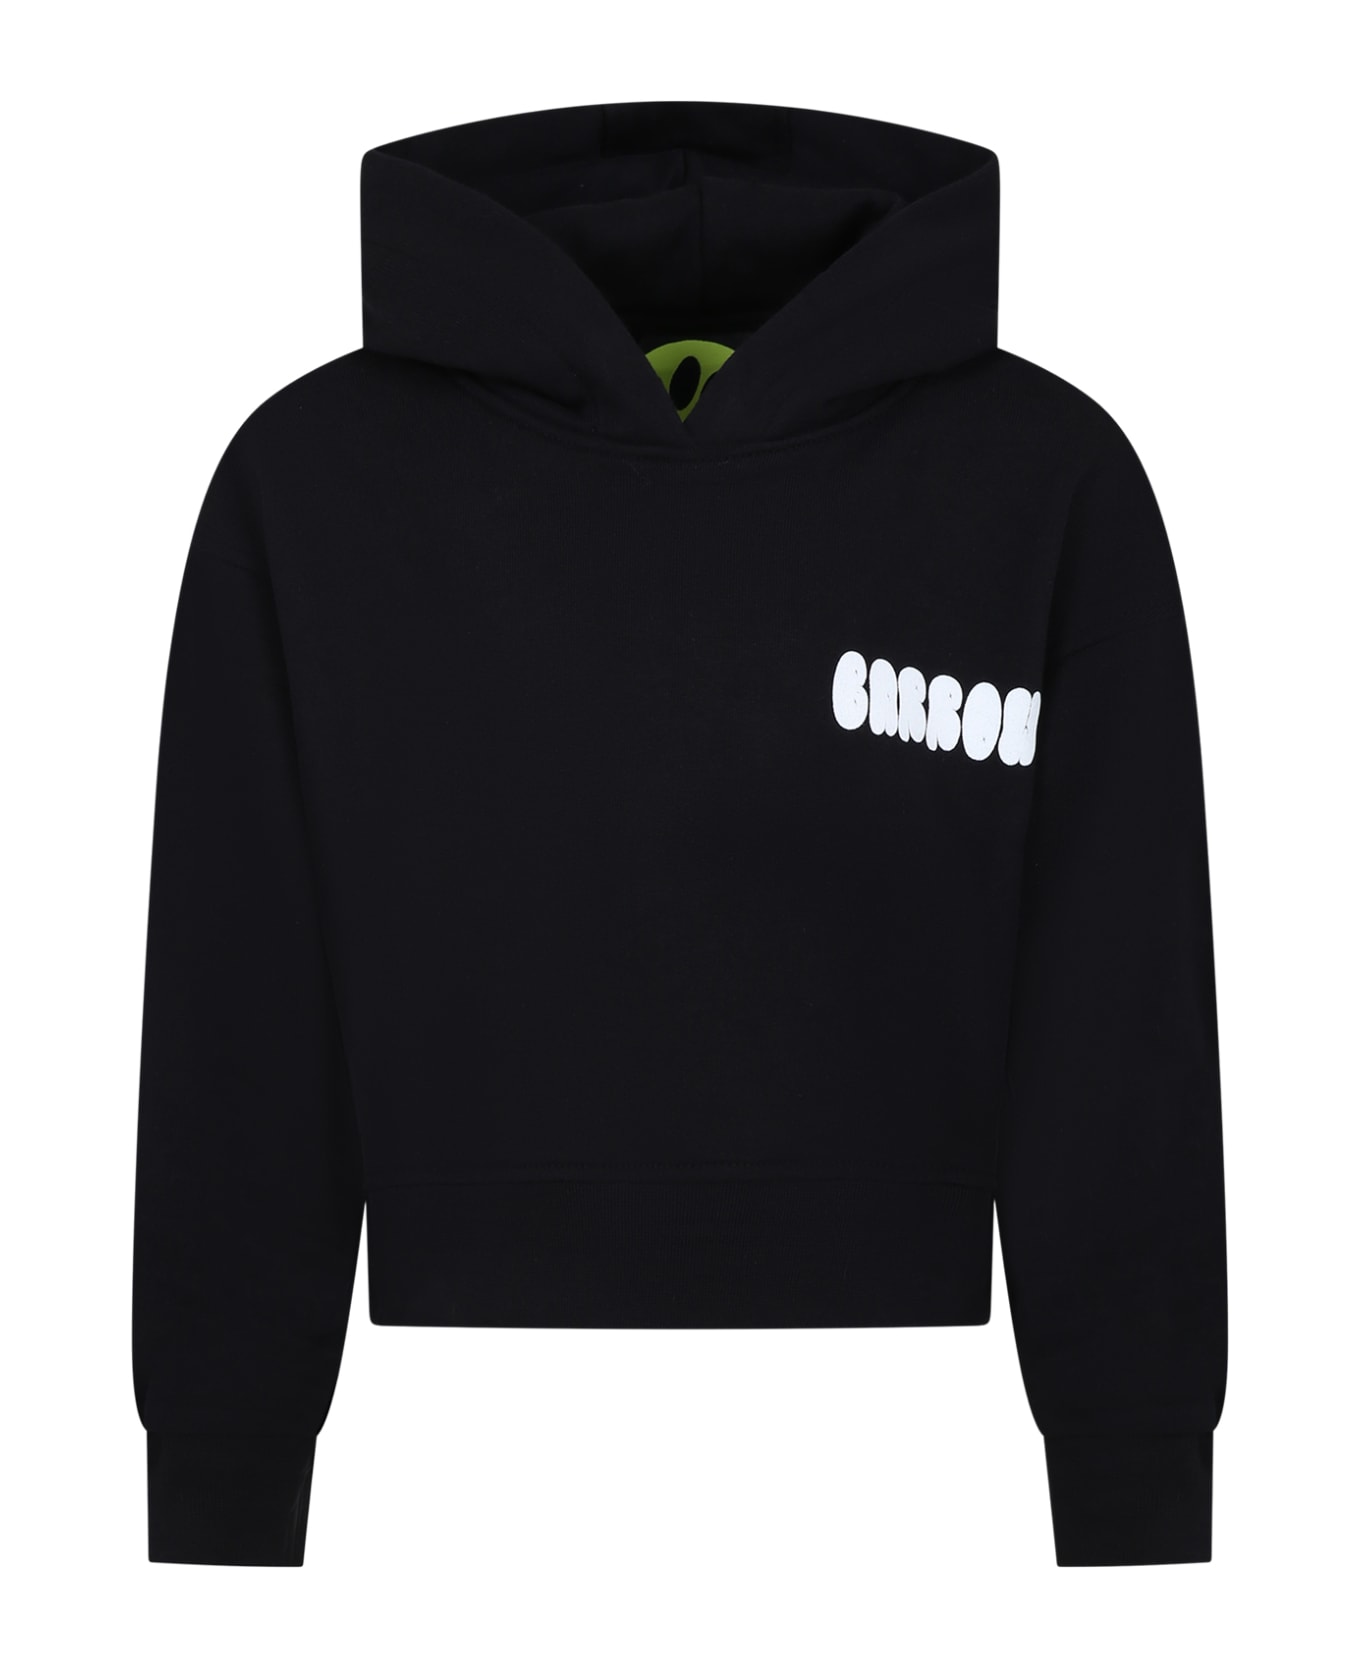 Barrow Black Sweatshirt For Girl With Logo And Print - Black